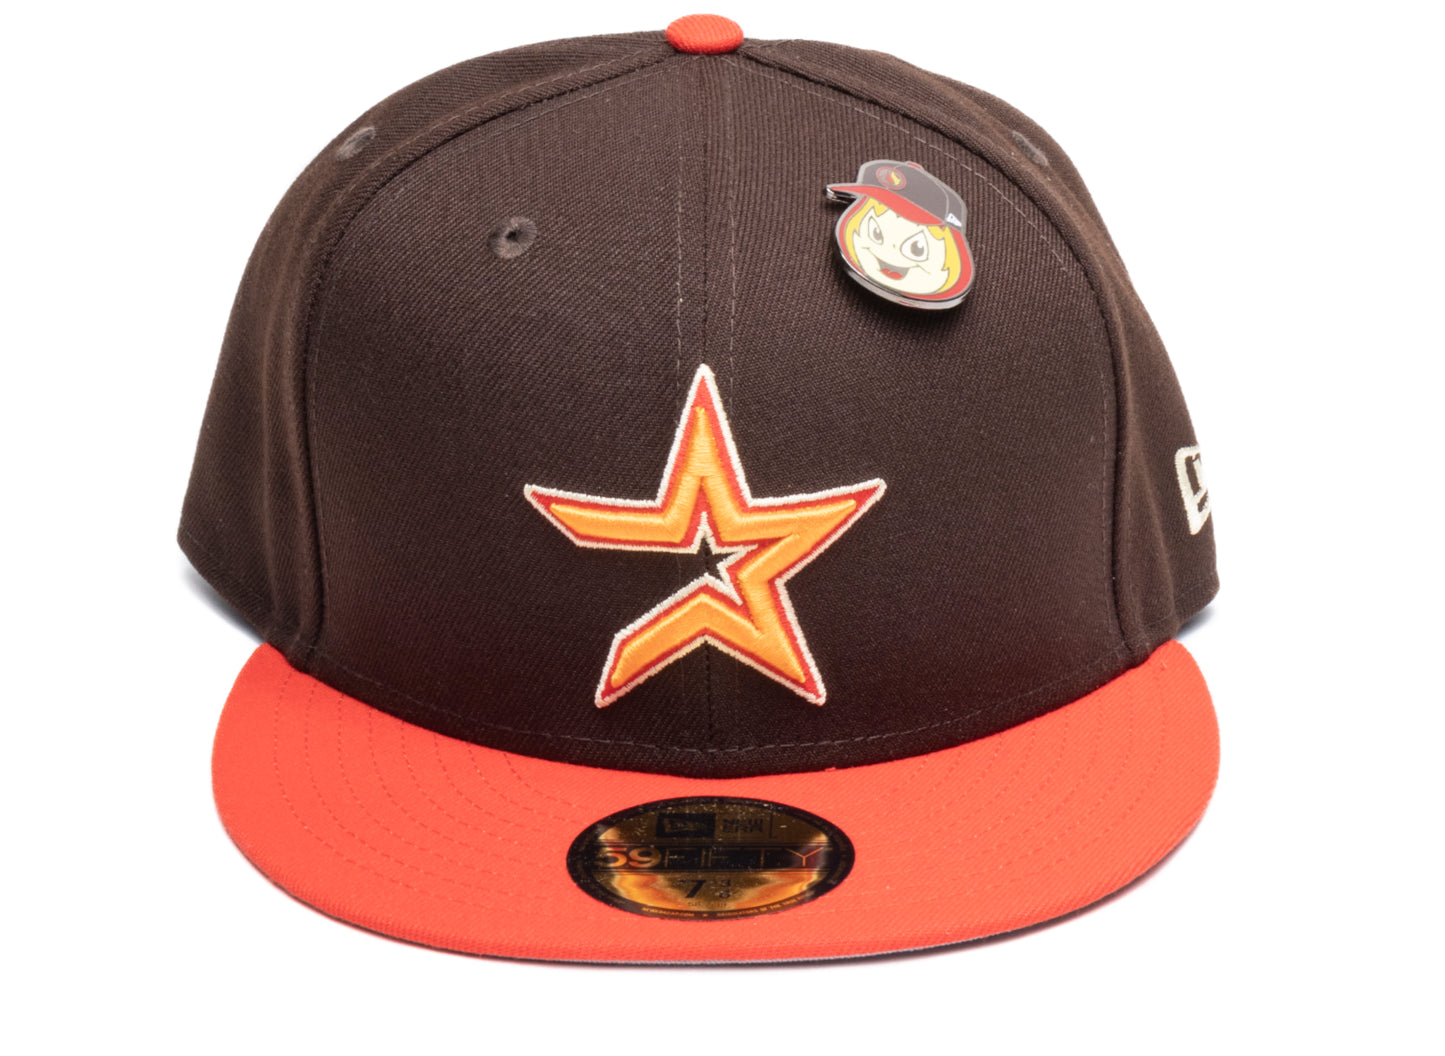 New Era Houston Astros Socks 'The Elements' Hat